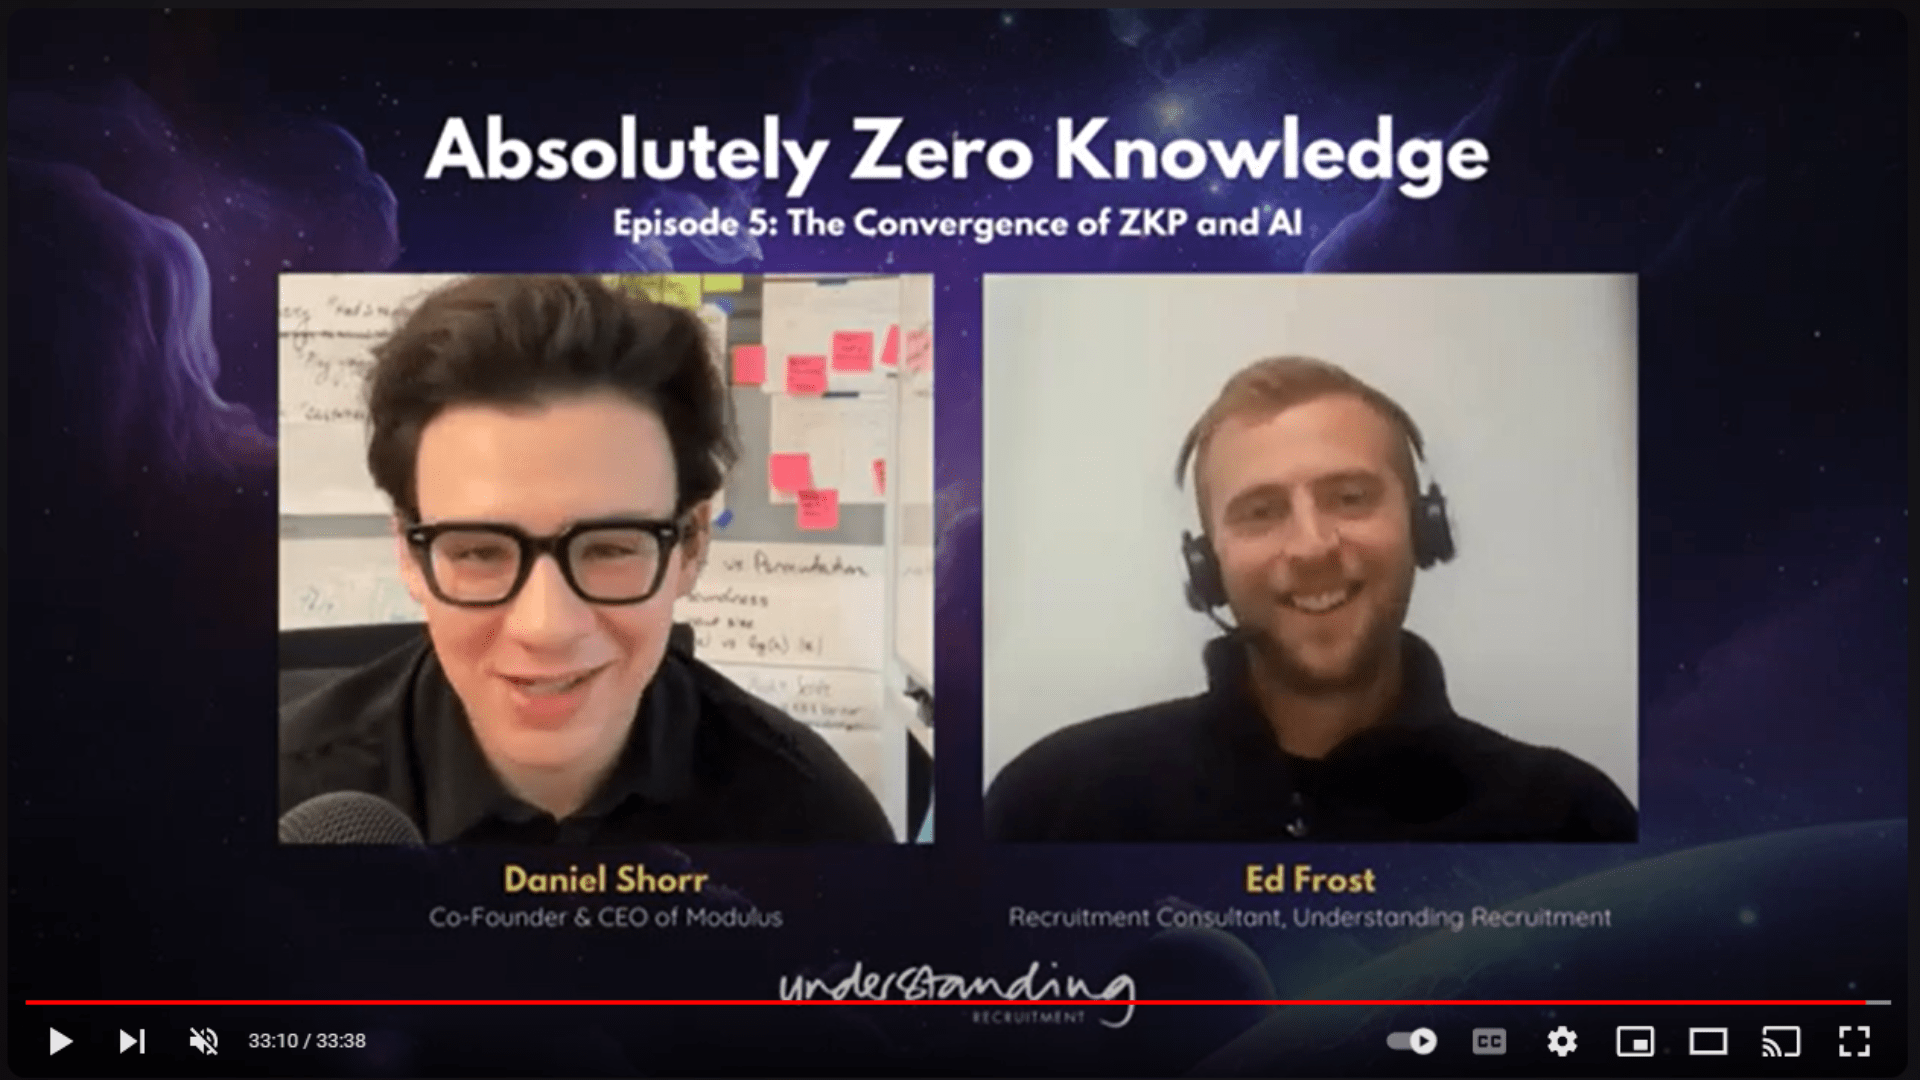 Absolutely Zero Knowledge Episode 5: Daniel Shorr